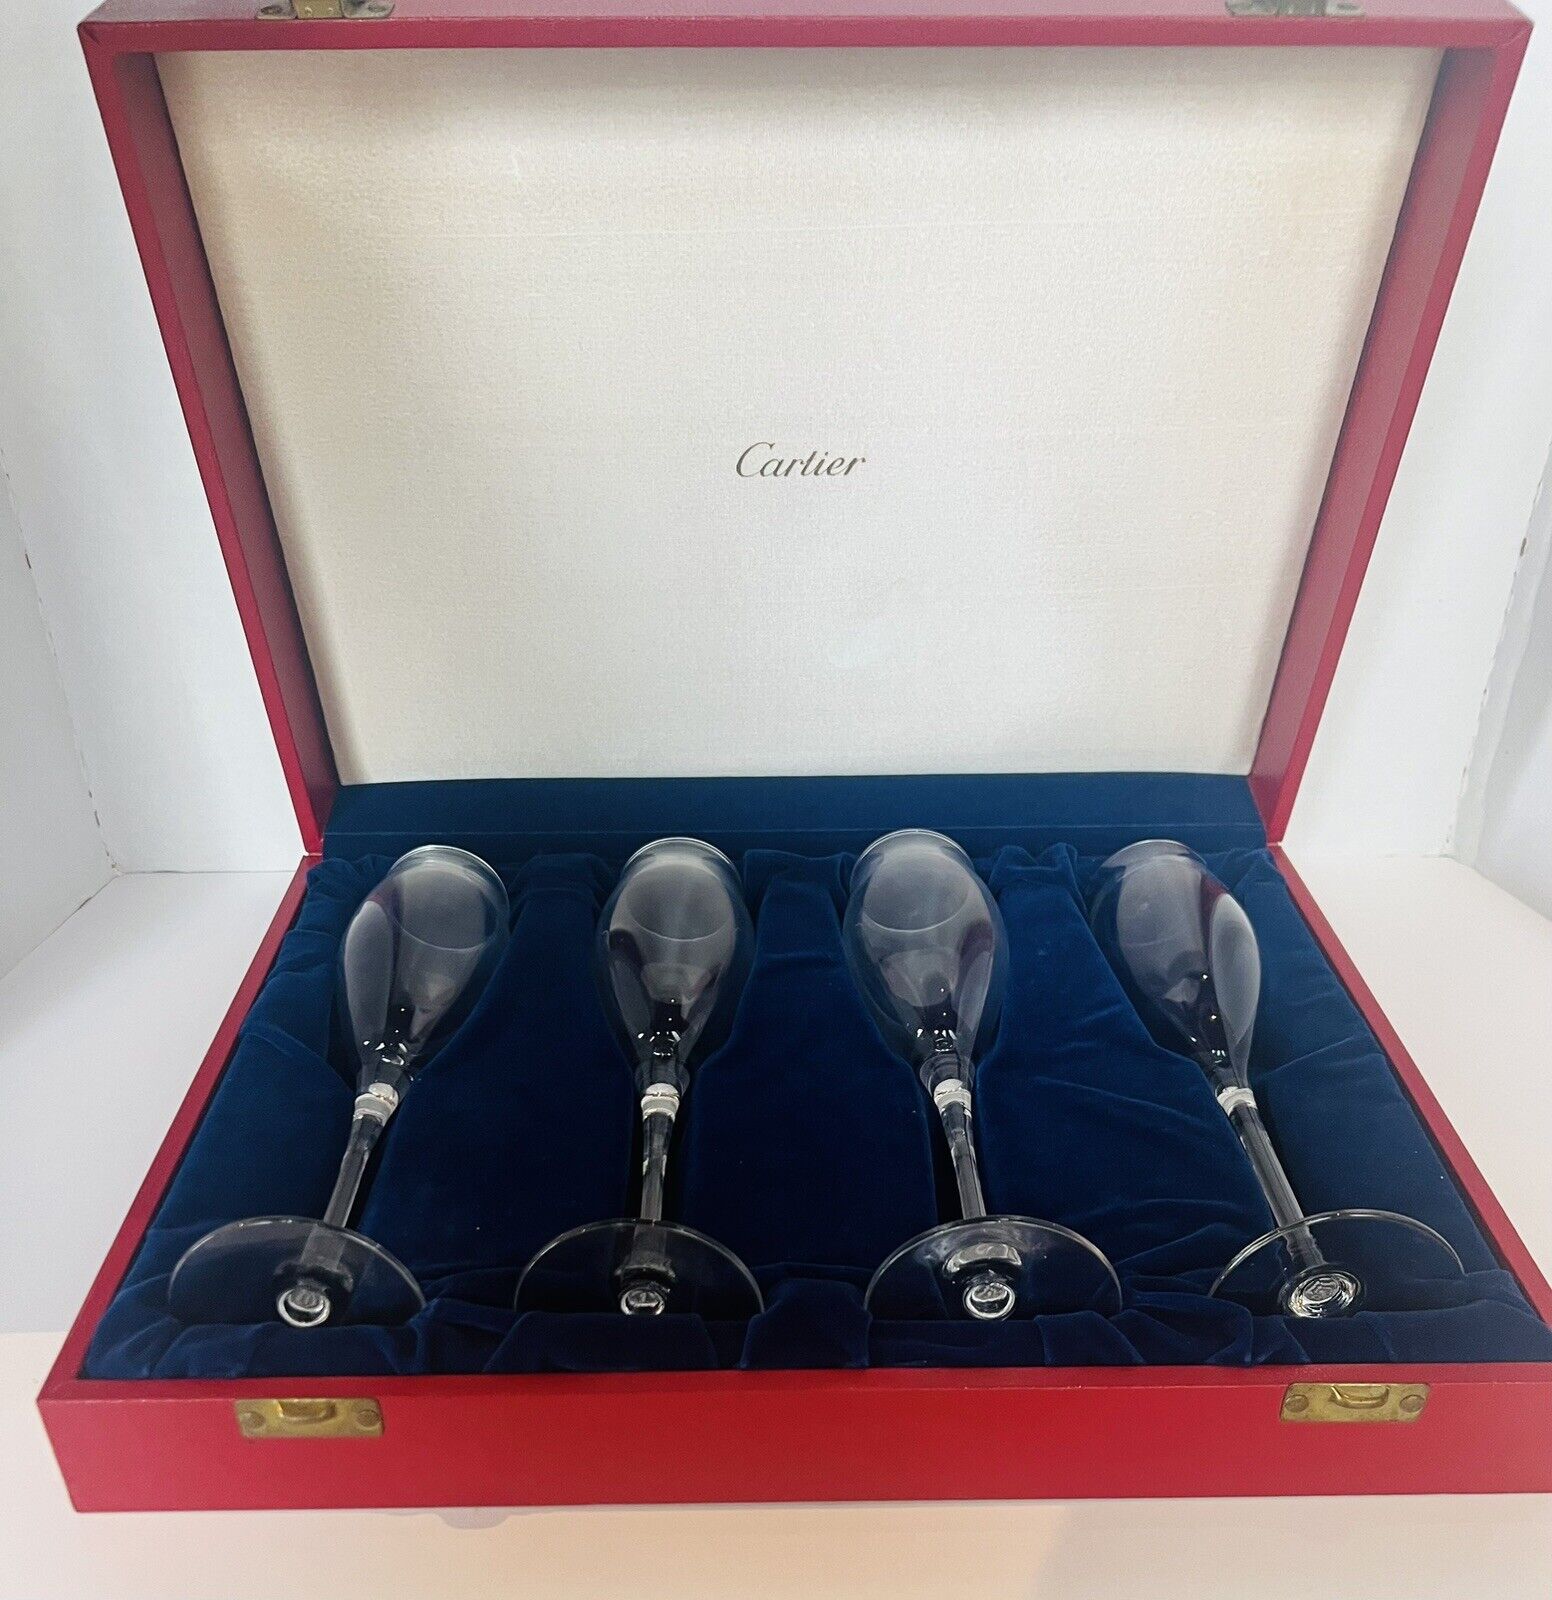 Vintage Cartier Champagne Glasses Flutes in Original Box Presentation Case